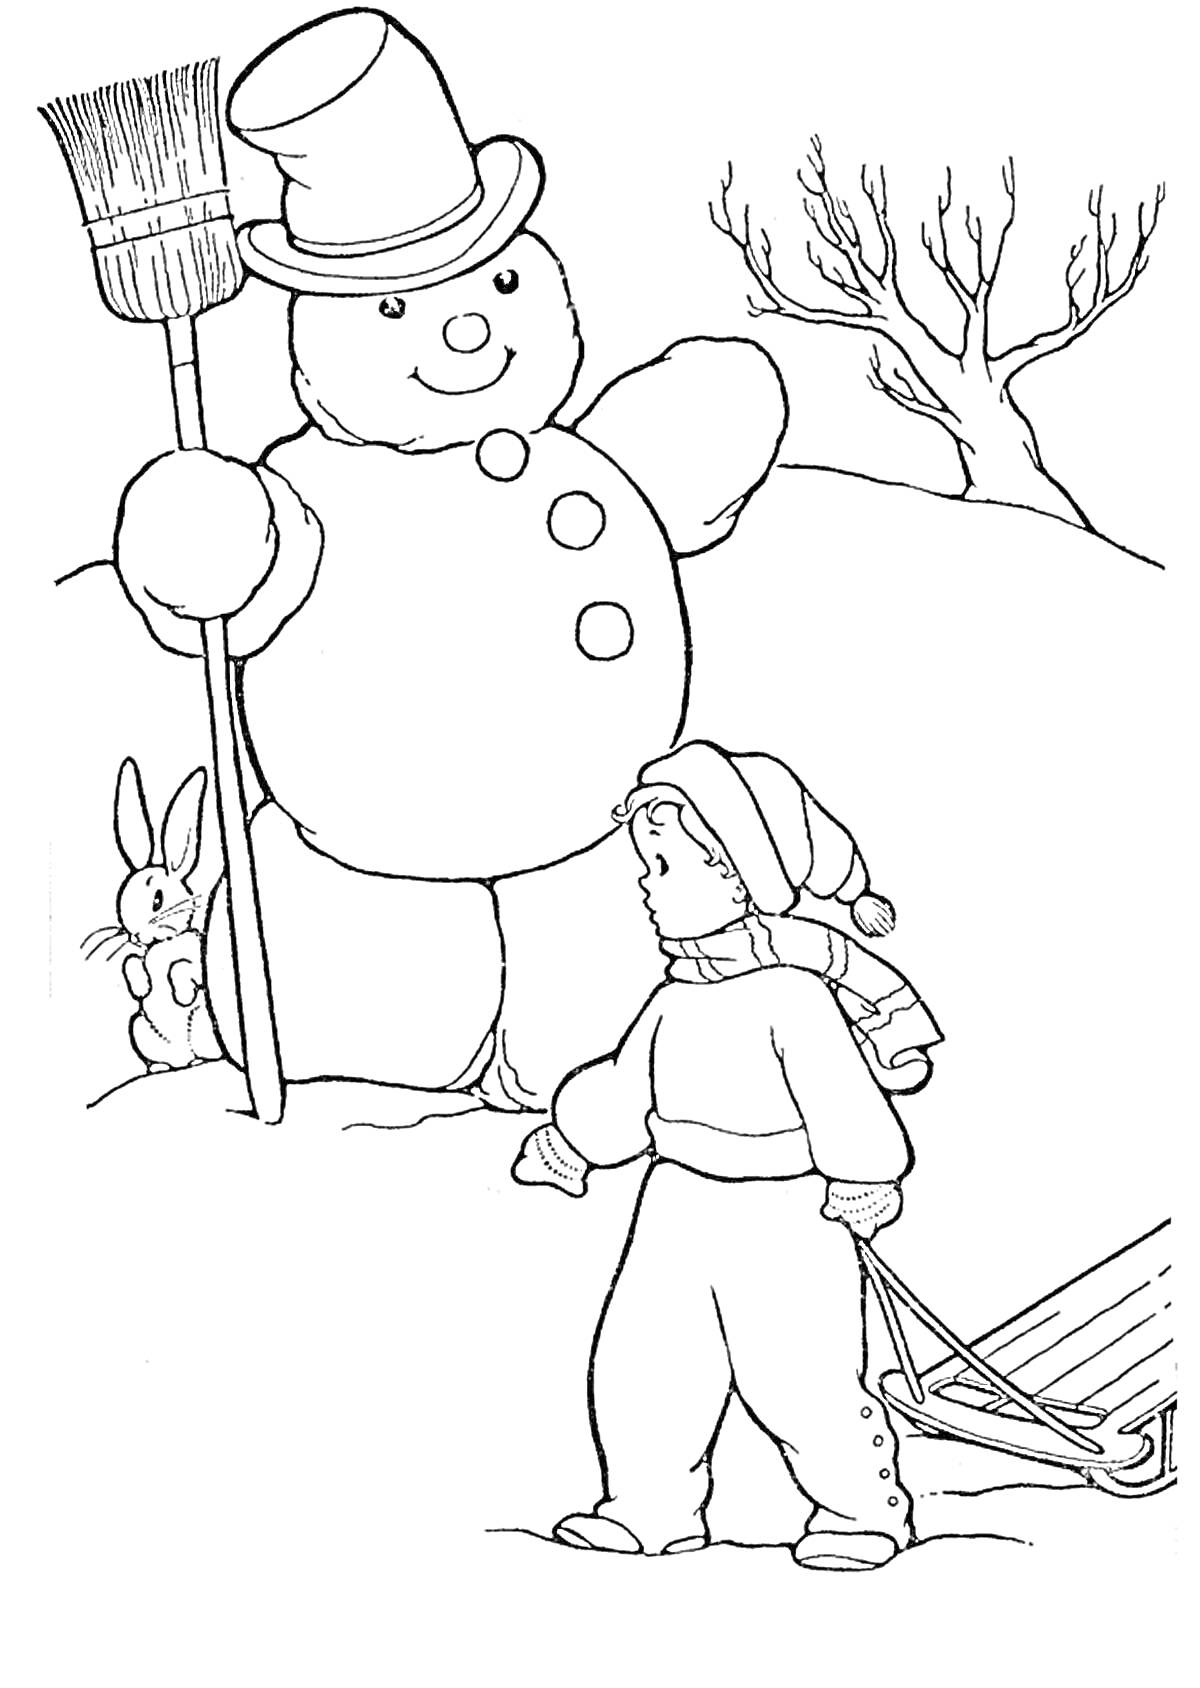 Снеговик с метлой, ребенок с санками, дерево и заяц